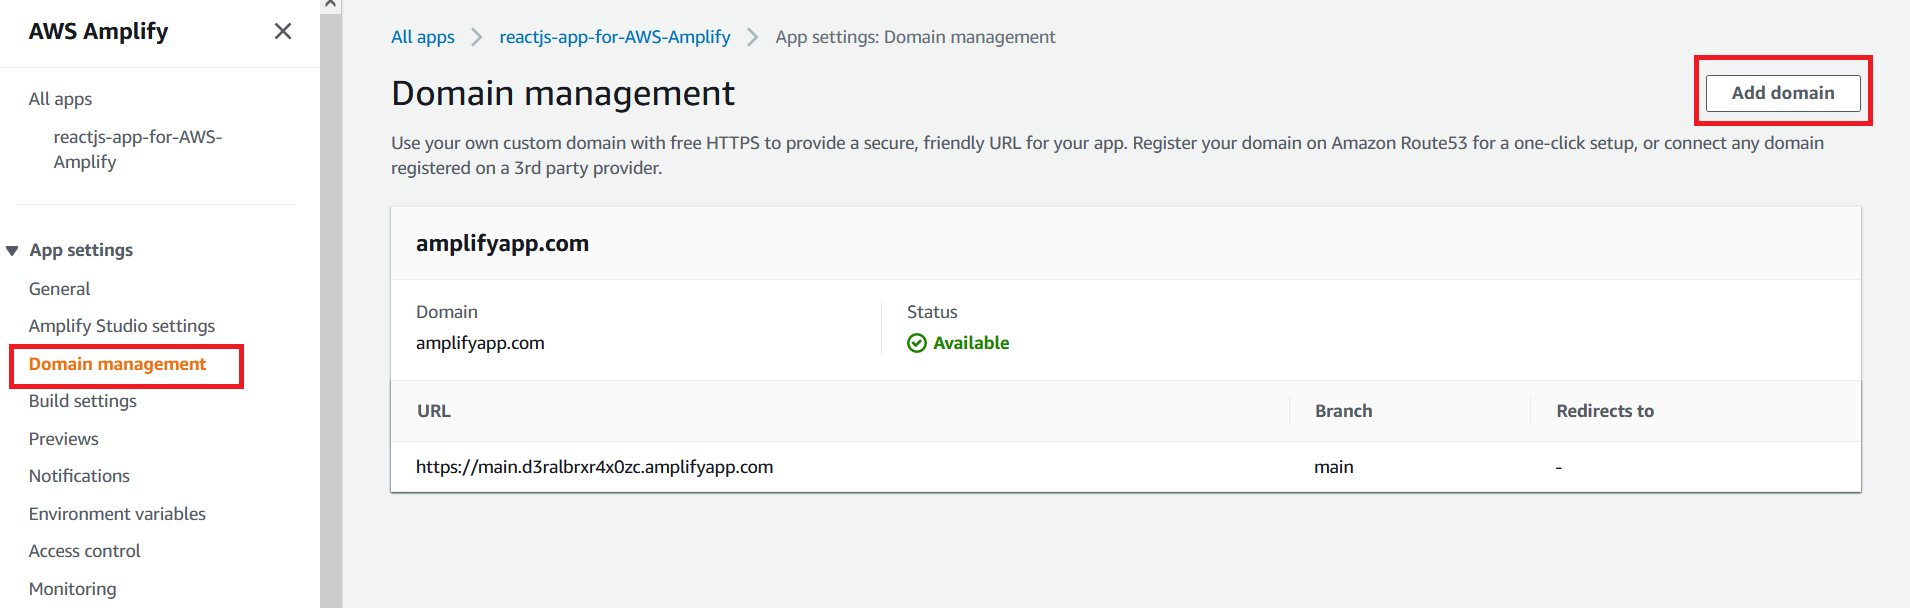 AWS Amplify Domain Management